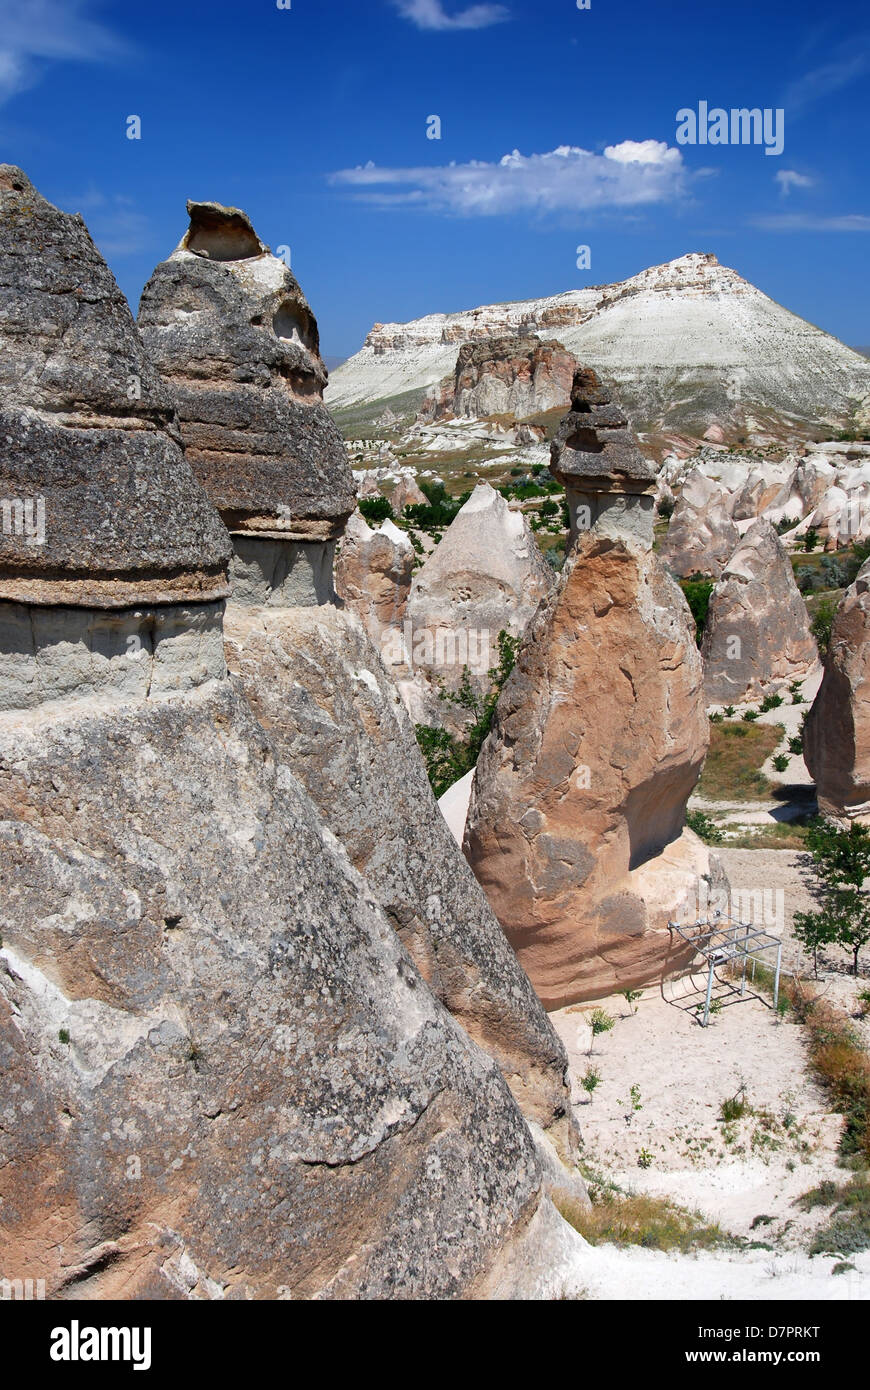 Vulcanic landscape in Cappadocia with columns and cones, near Zelve (Goreme region). Anatolia, Turkey Stock Photo